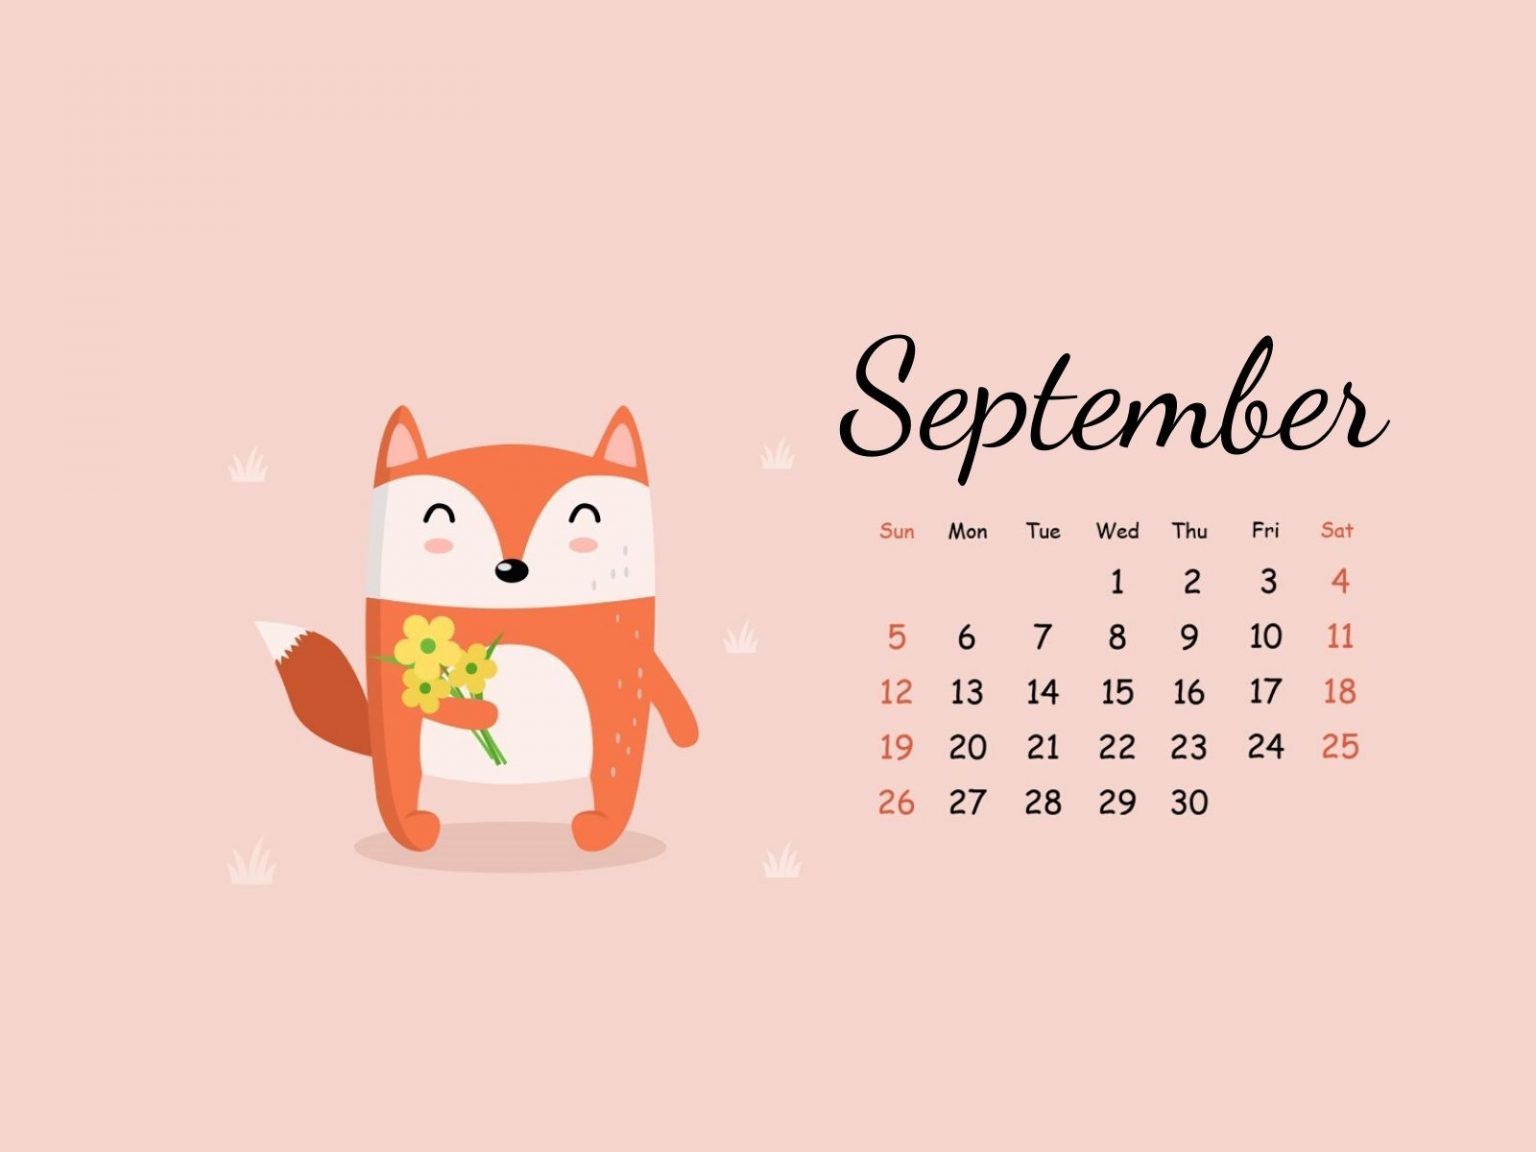 September 2021 Calendar Wallpaper. Calendar wallpaper, 2021 calendar, Free printable calendar